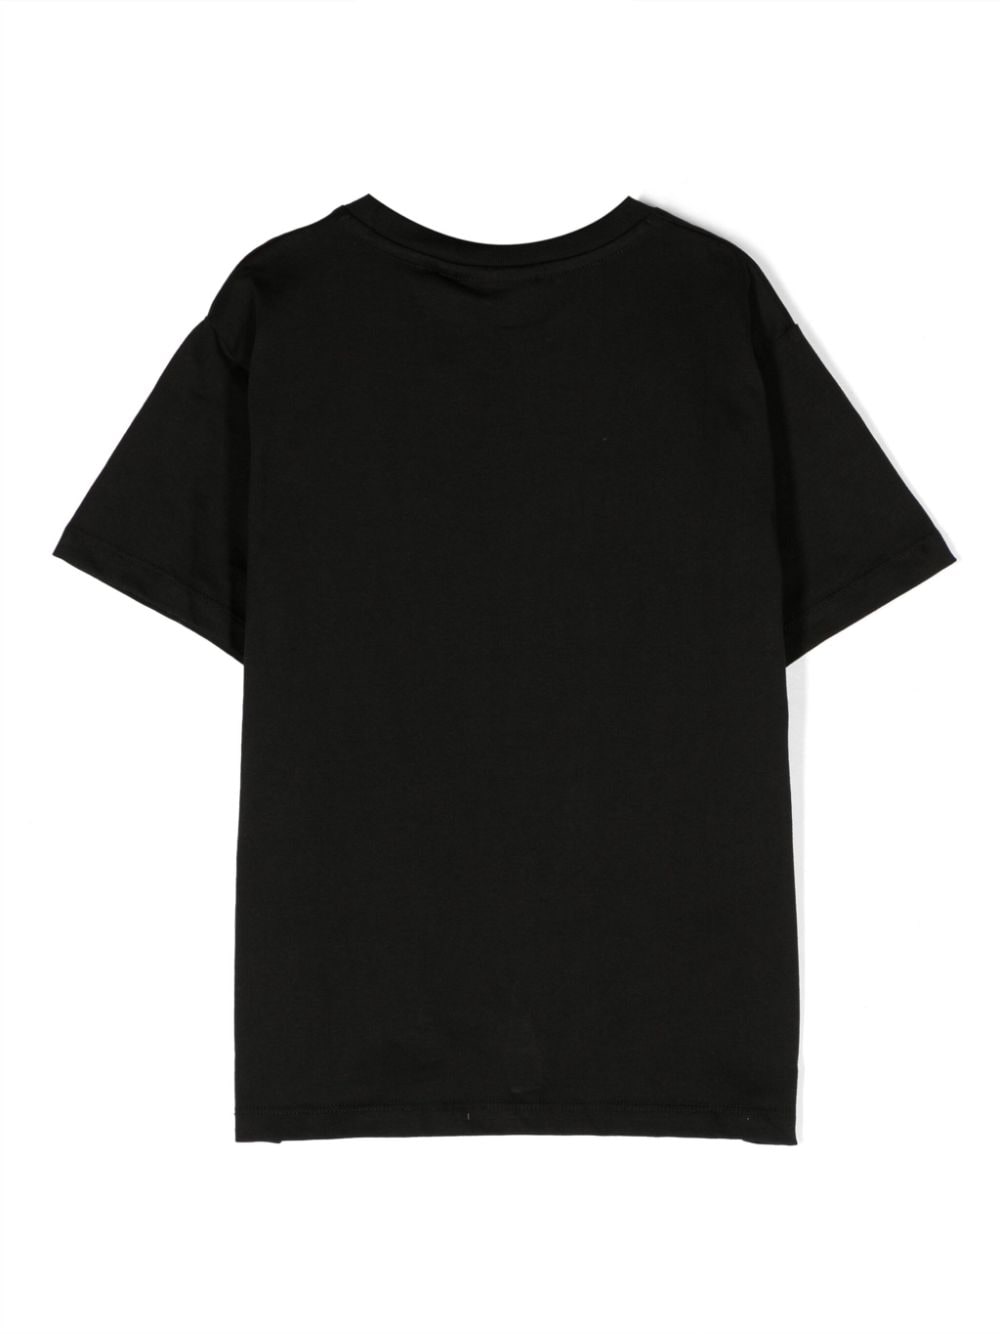 T-shirt bambino nero/bianco